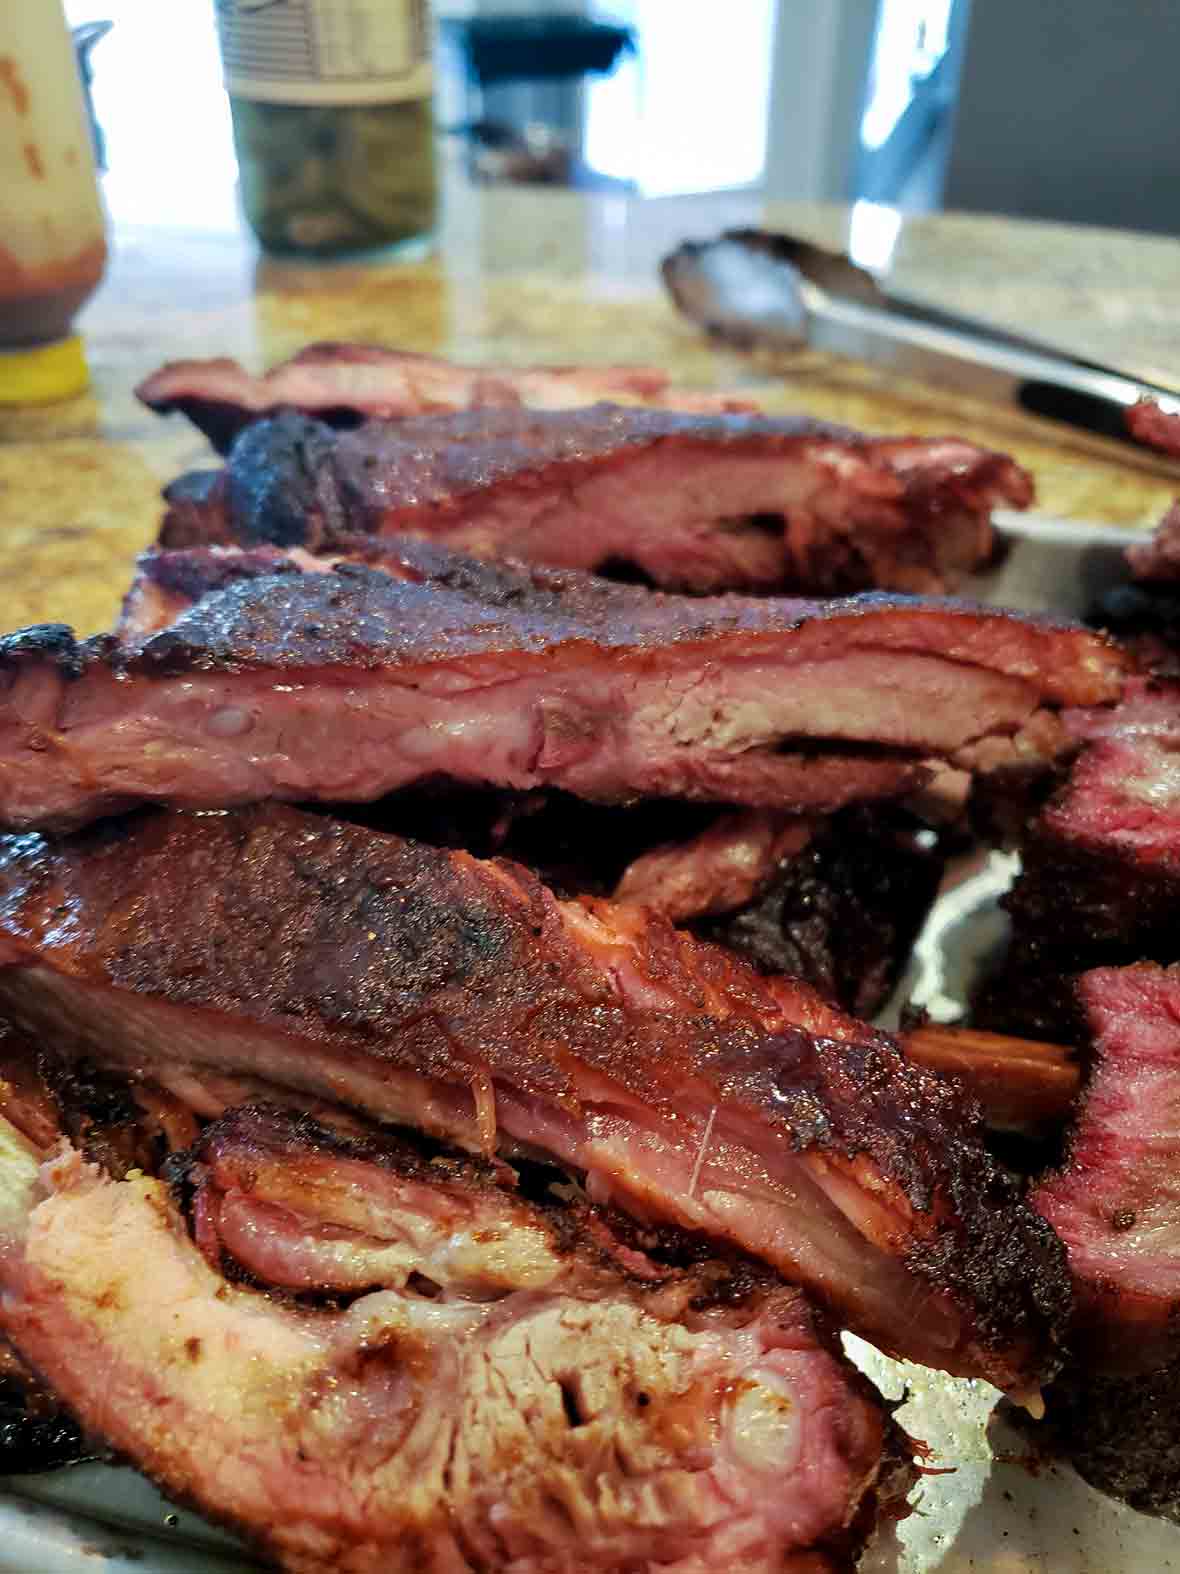 A pile of smoked pork ribs.